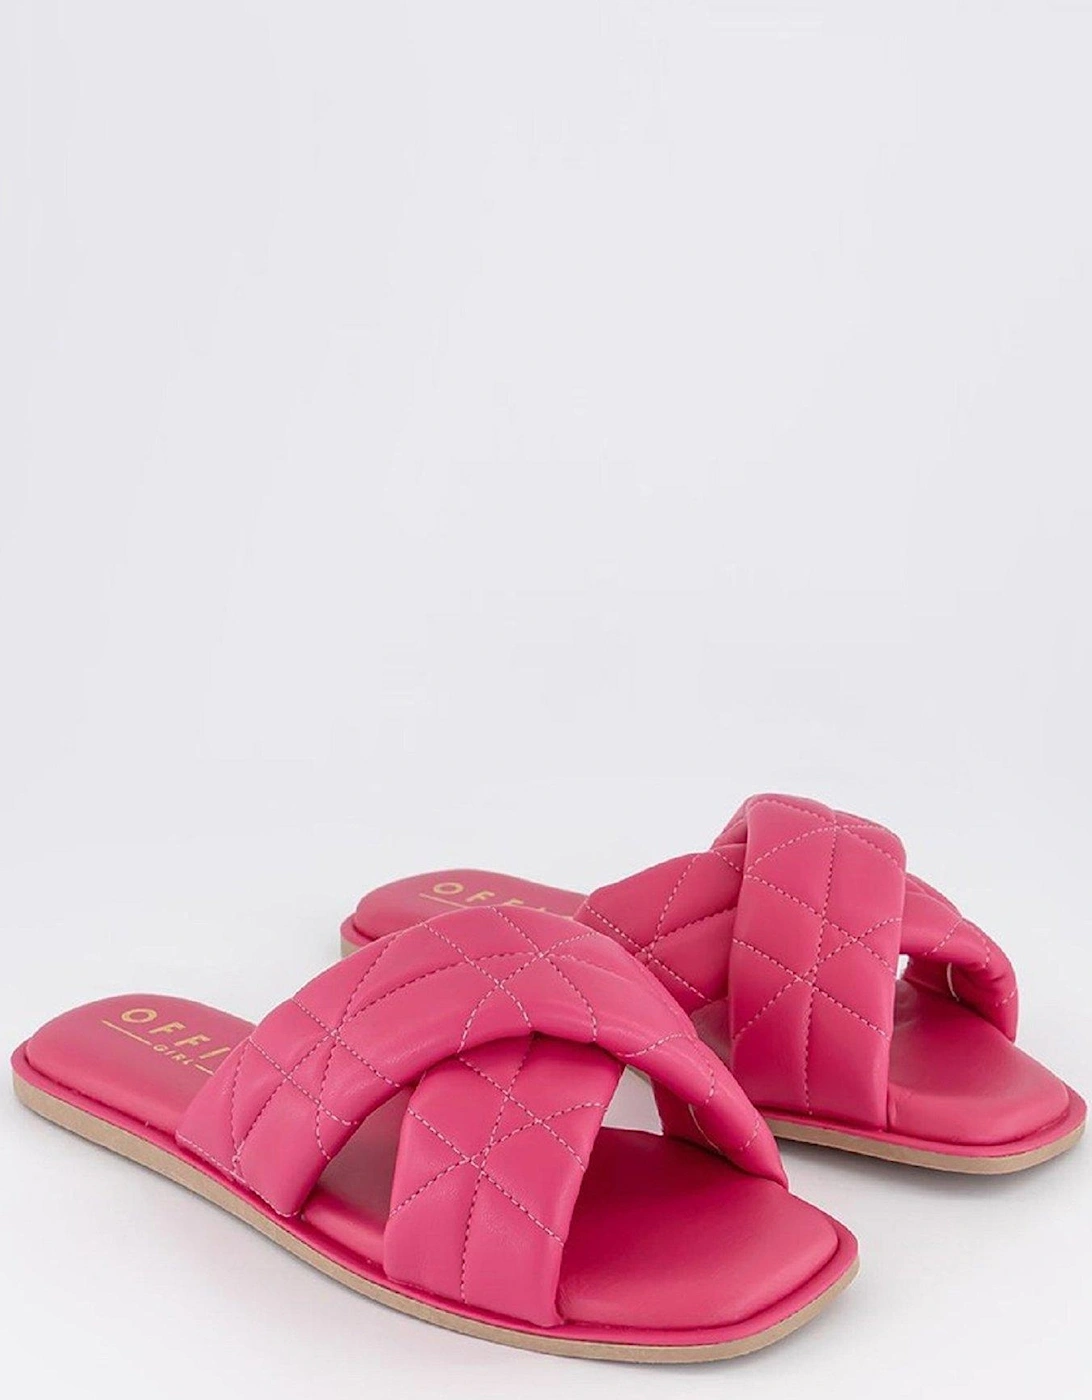 Squeeze Flat Sandals - Pink